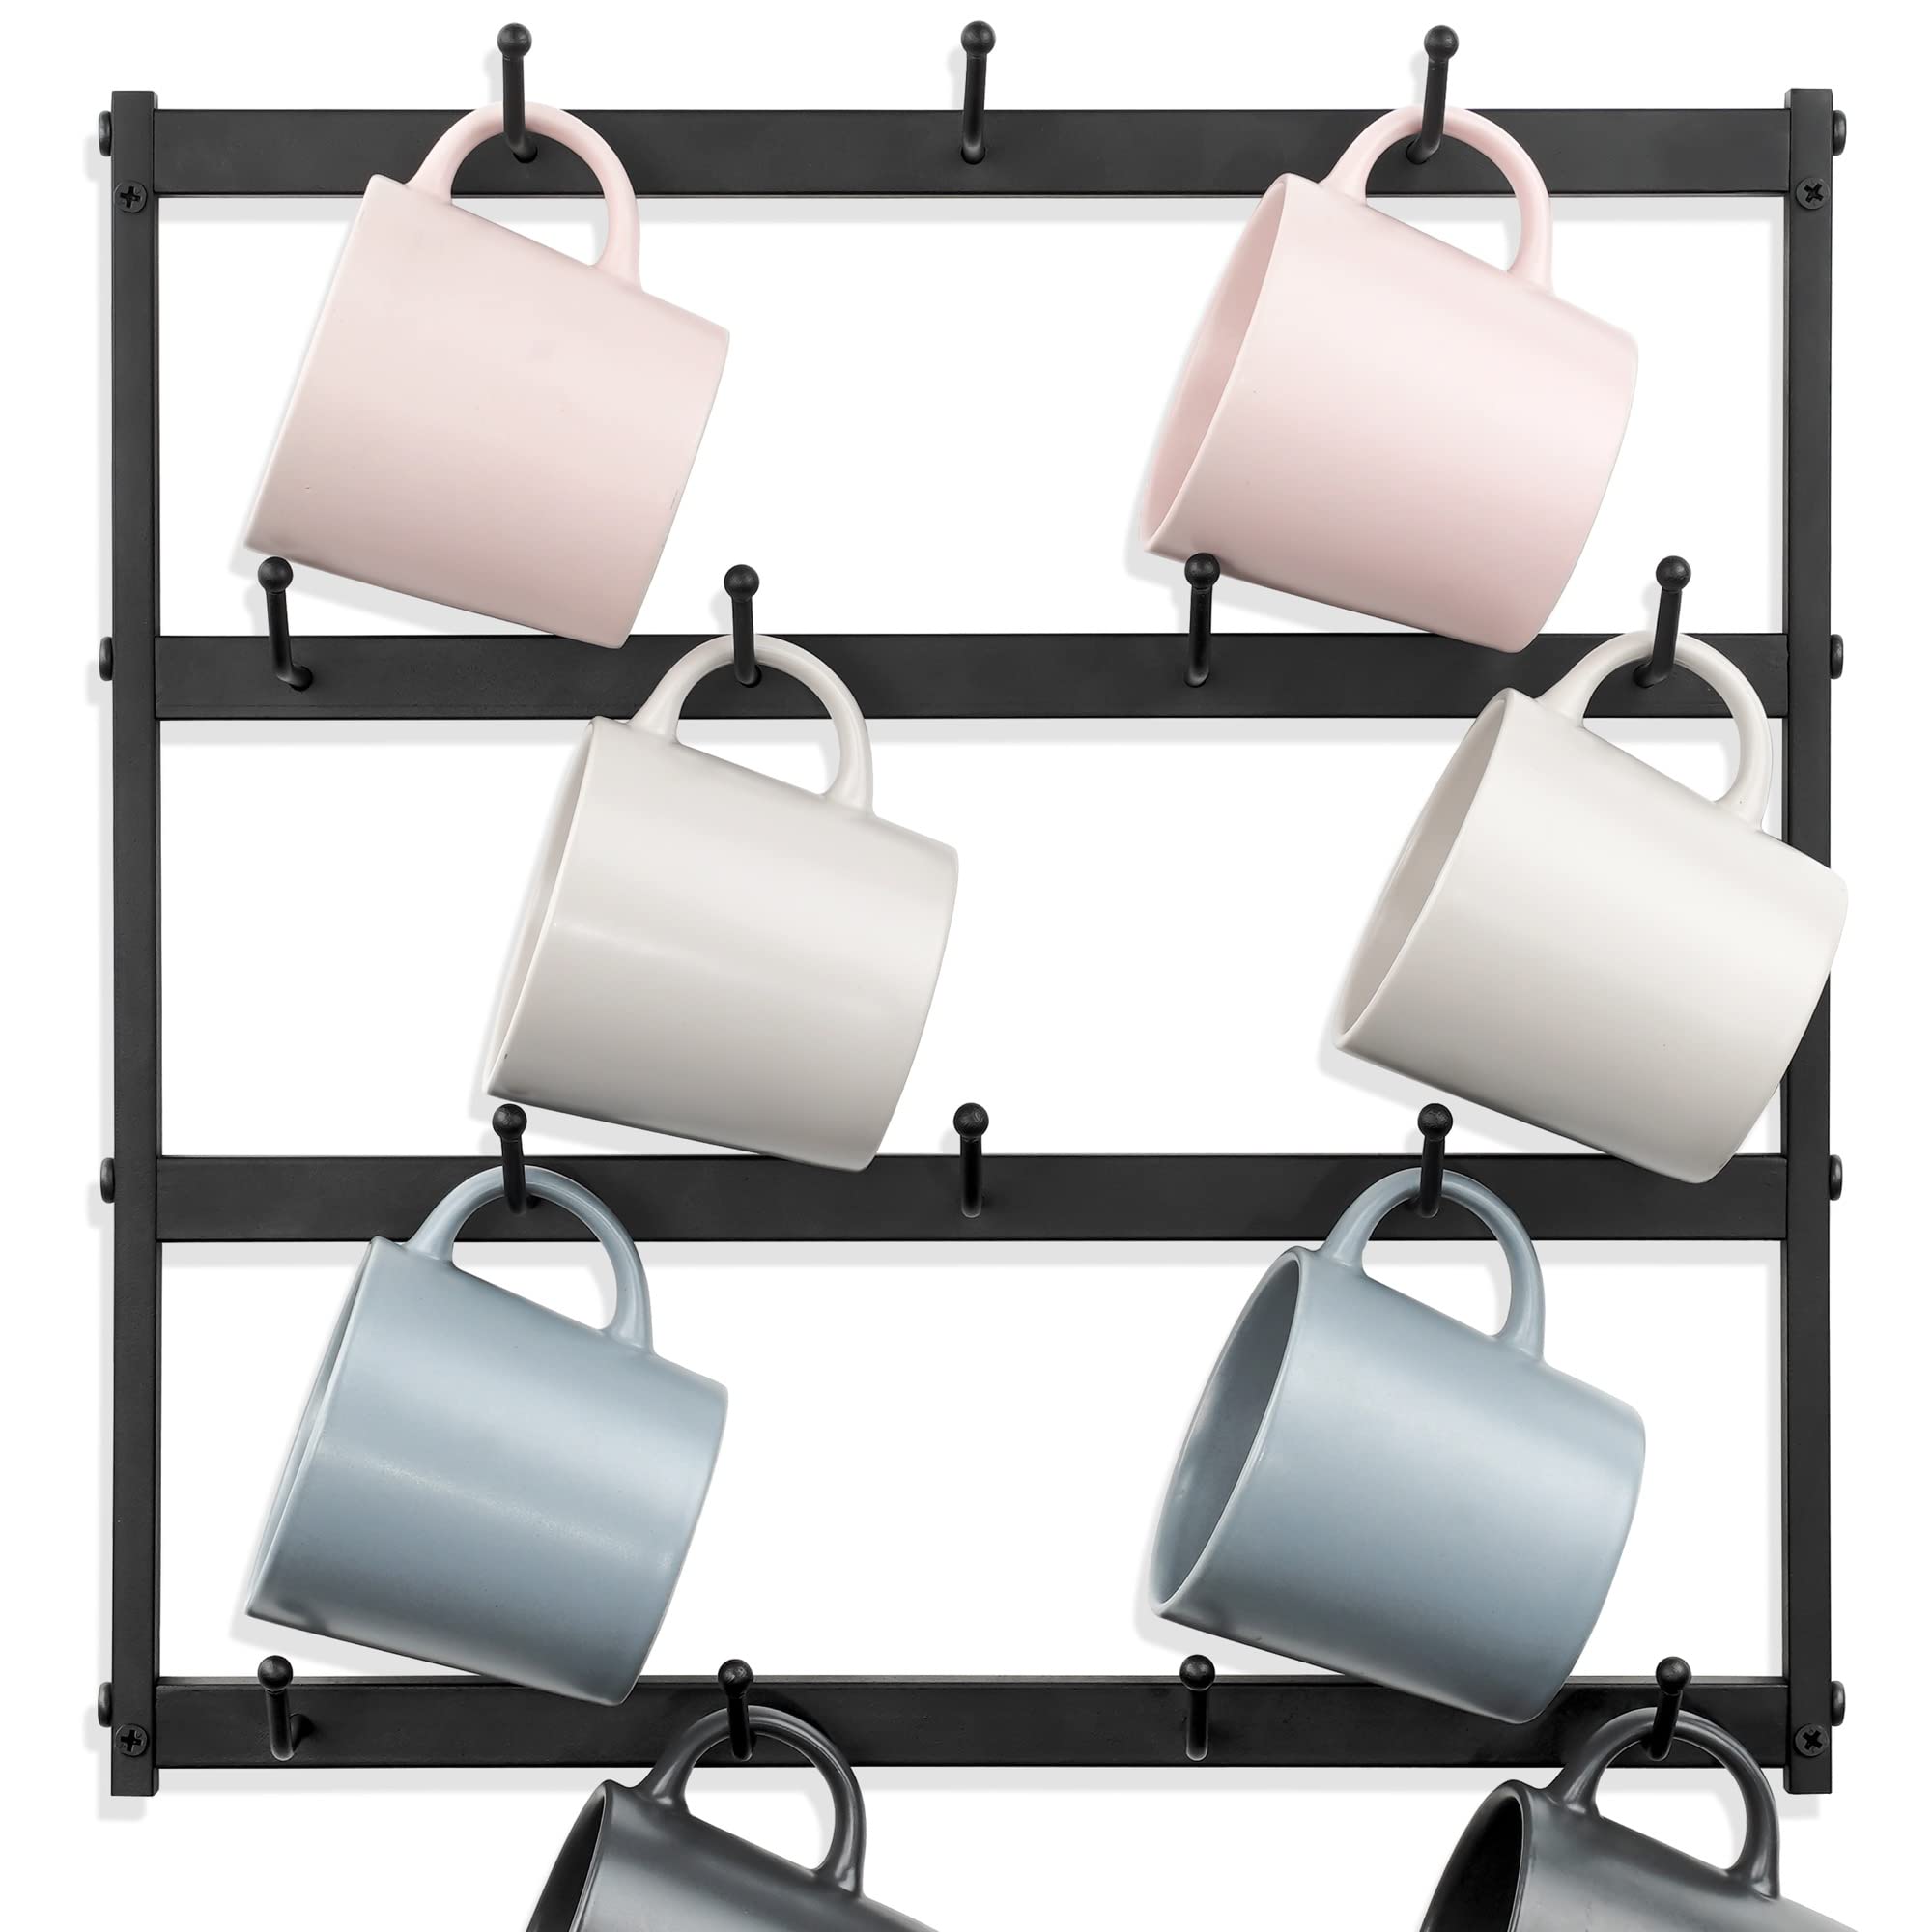 AJART Wall-Mounted Coffee Mug Holder: 14 Hooks Square Coffee Cup Rack - Metal Coffee Mug Holder Organizer Your Cups